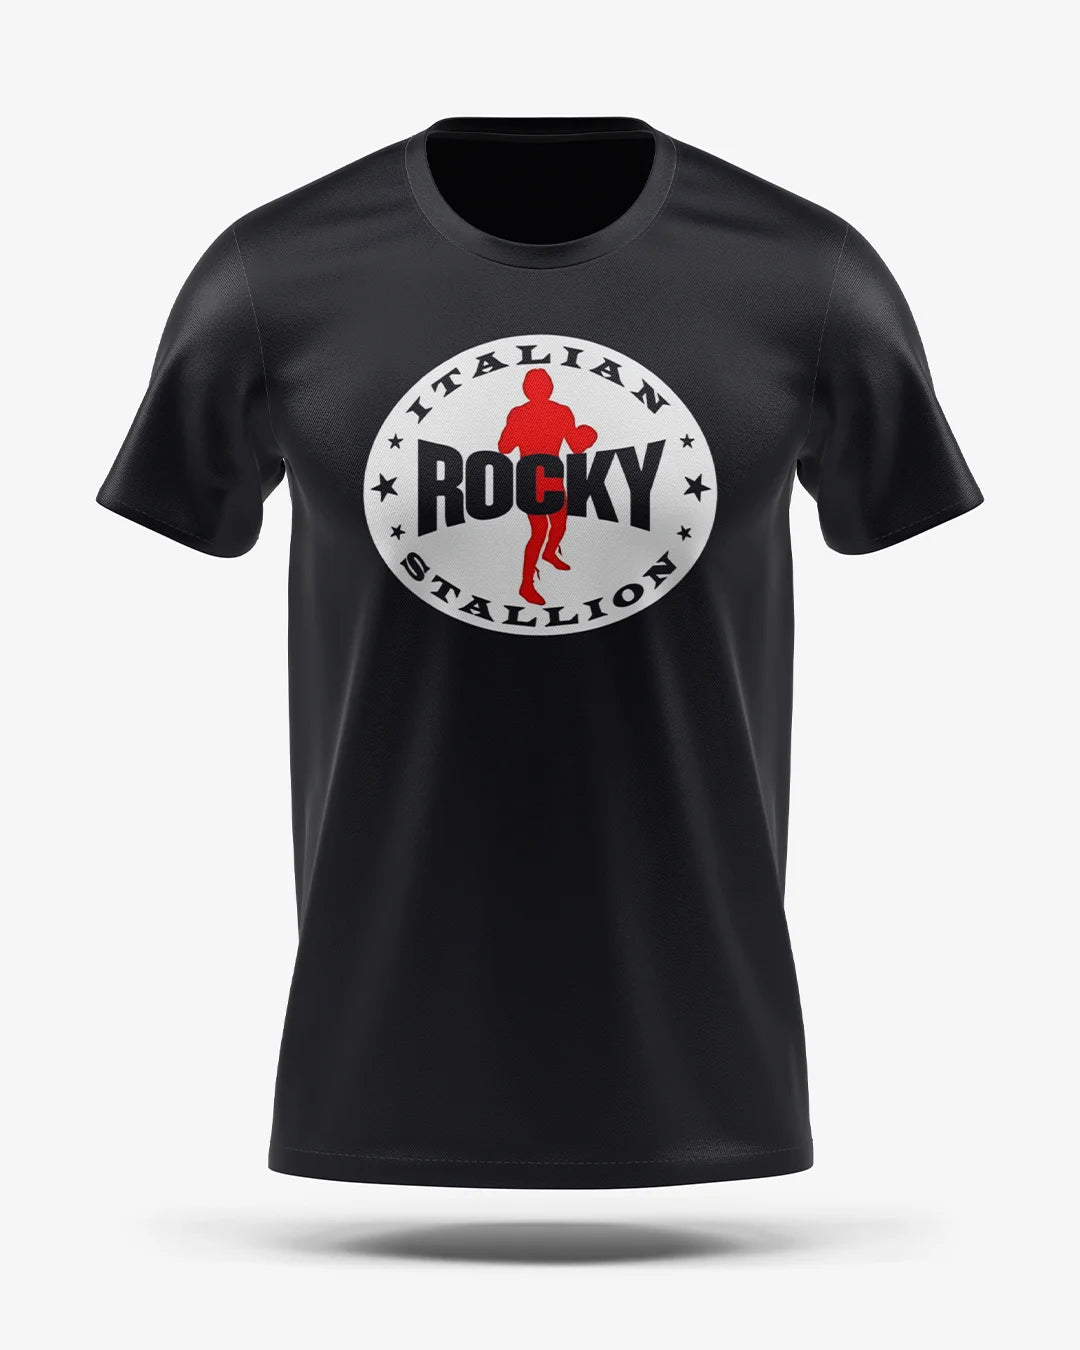 Camiseta Esporte Dry Fit - Rocky Italian Stallion